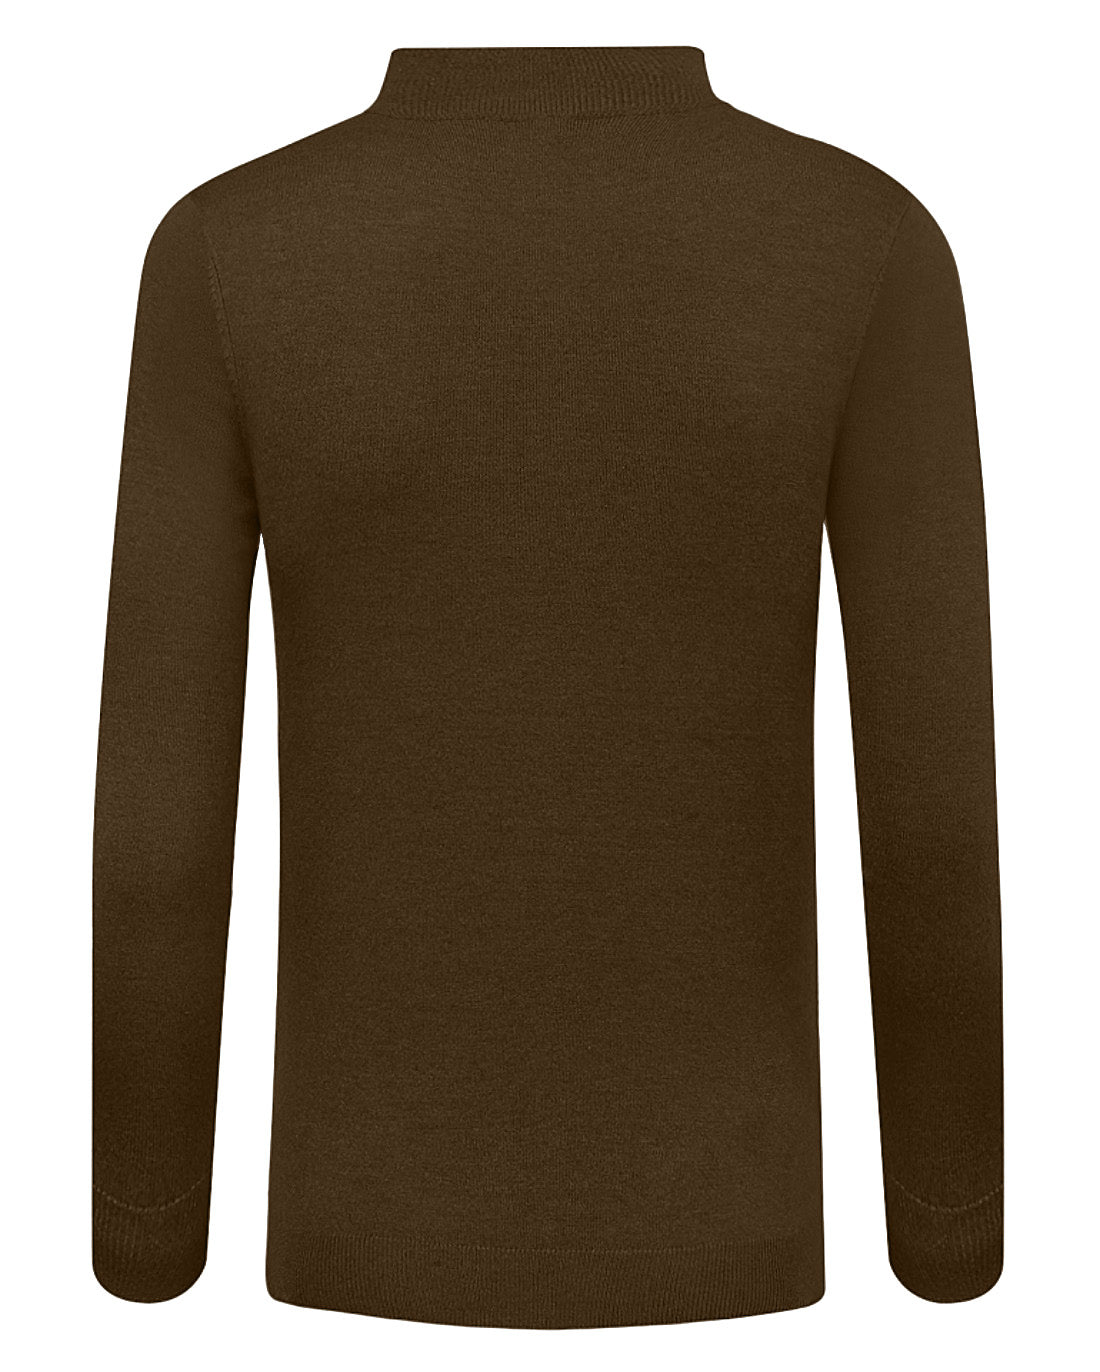 Aiyino Men's Quarter Zip Sweaters Slim Fit Lightweight Cotton Mock Turtleneck Pullover Sweaters